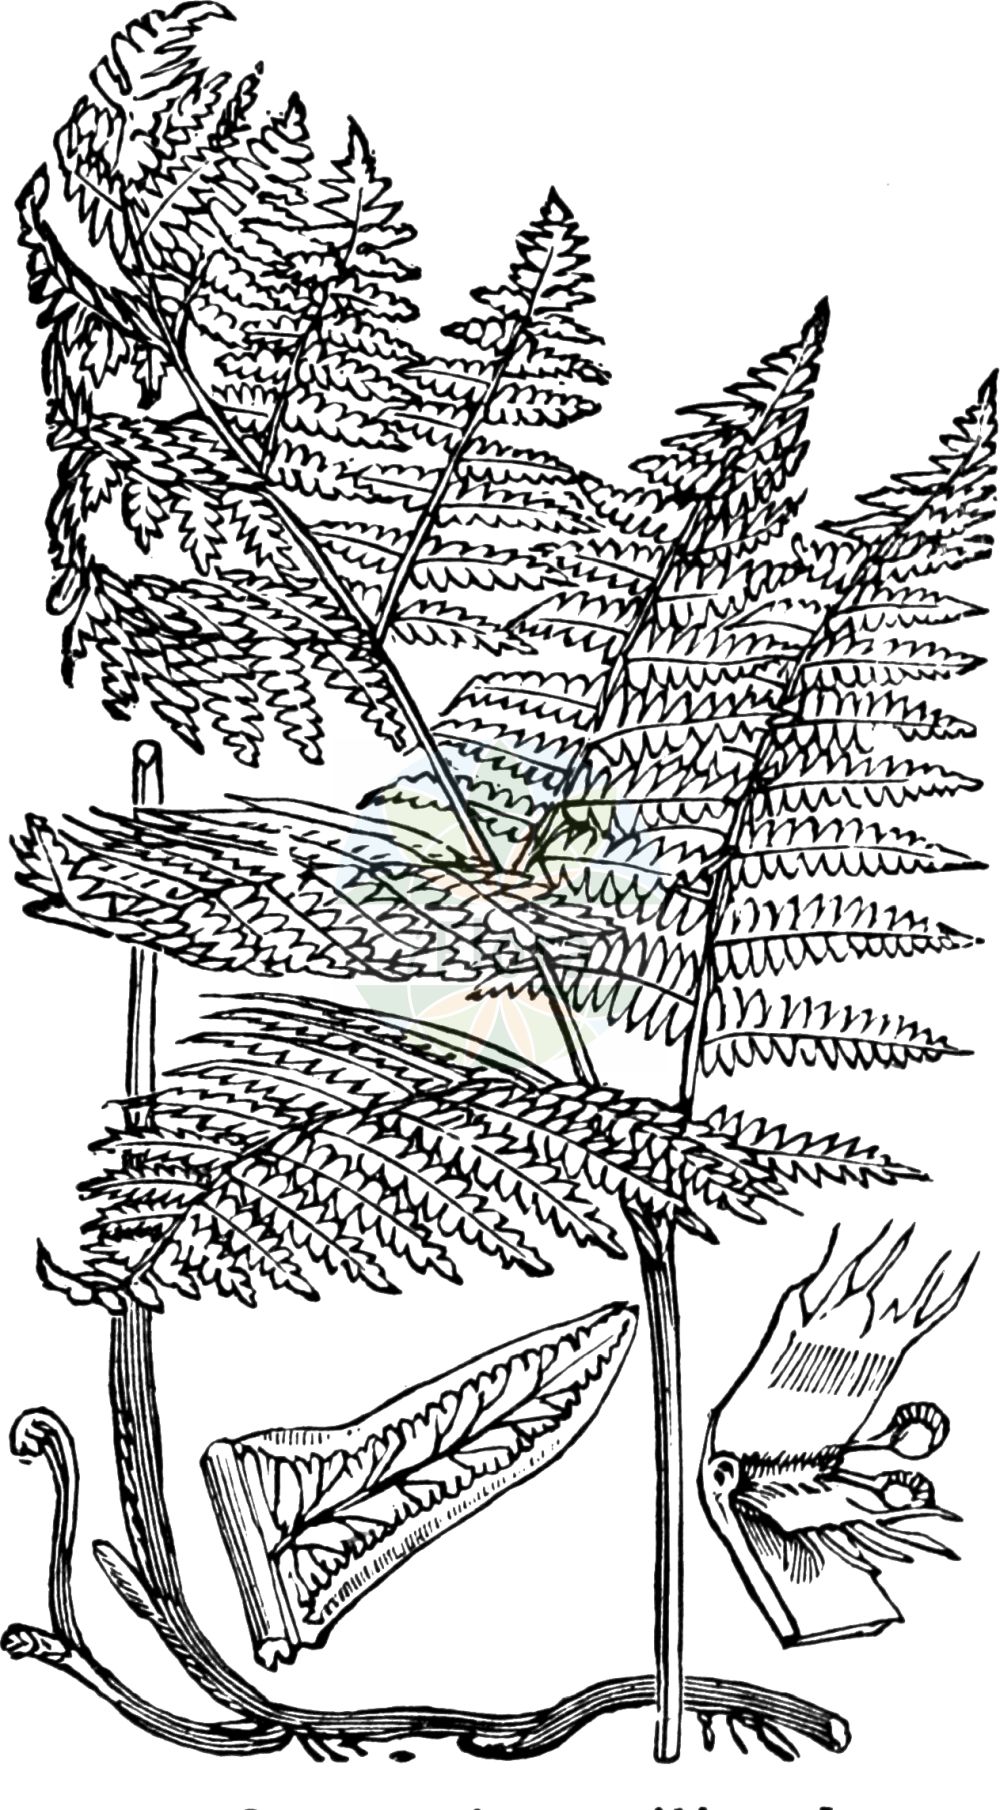 Historische Abbildung von Pteridium aquilinum (Adlerfarn - Bracken). Das Bild zeigt Blatt, Bluete, Frucht und Same. ---- Historical Drawing of Pteridium aquilinum (Adlerfarn - Bracken). The image is showing leaf, flower, fruit and seed.(Pteridium aquilinum,Adlerfarn,Bracken,Allosorus tauricus,Cincinalis aquilina,Eupteris aquilina,Polypodium austriacum,Pteridium aquilinum,Pteridium herediae,Pteridium tauricum,Pteris aquilina,Pteris brevipes,Pteris herediae,Adlerfarn,Bracken,Western Brackenfern,Bracken Fern,Pteridium,Adlerfarn,Dennstaedtiaceae,Adlerfarngewächse,Braacken family,Blatt,Bluete,Frucht,Same,leaf,flower,fruit,seed,Fitch et al. (1880))